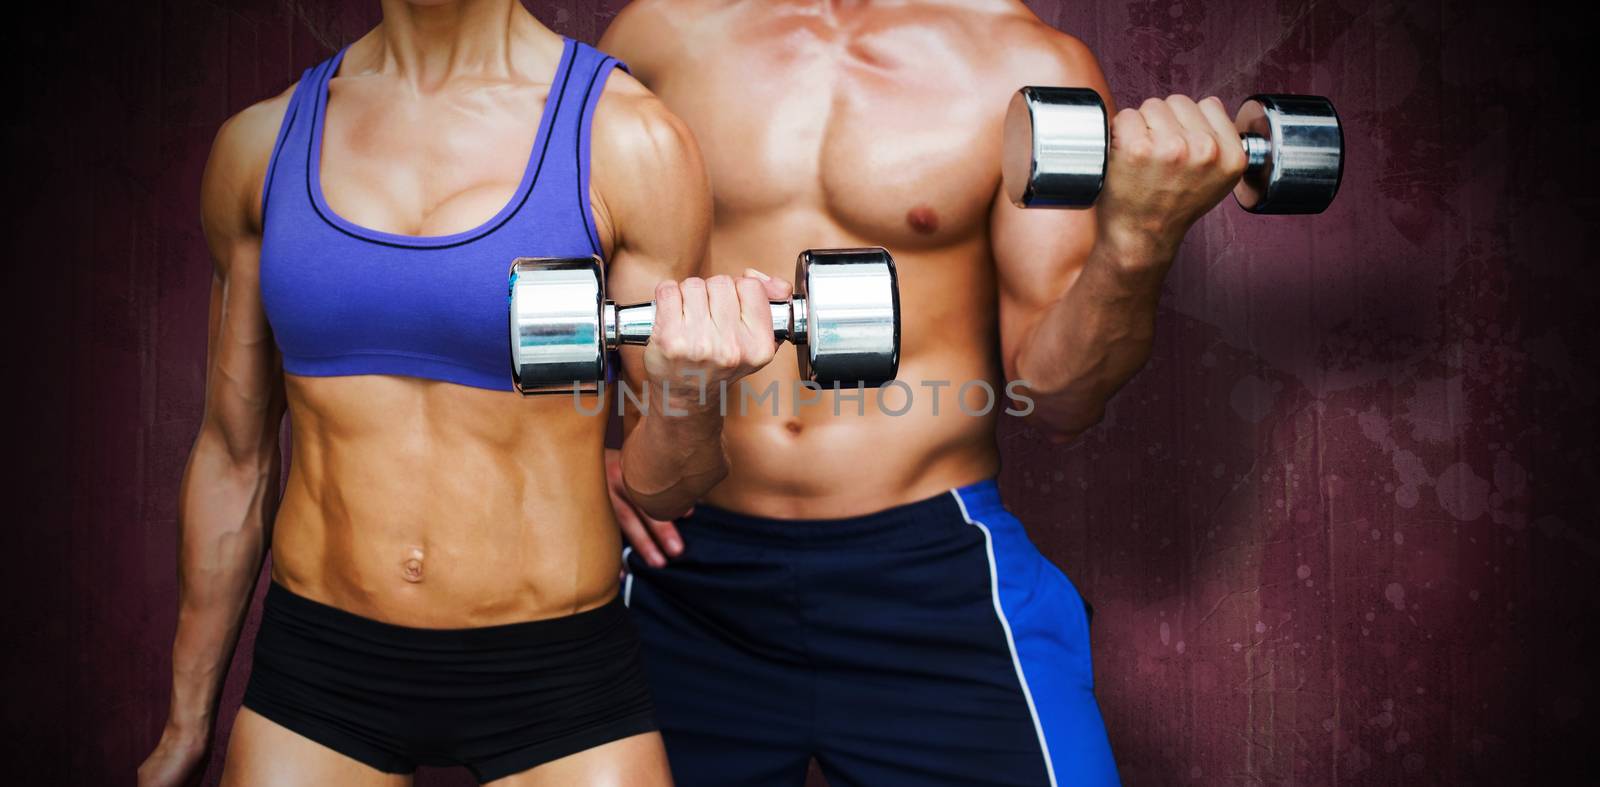 Composite image of bodybuilding couple by Wavebreakmedia